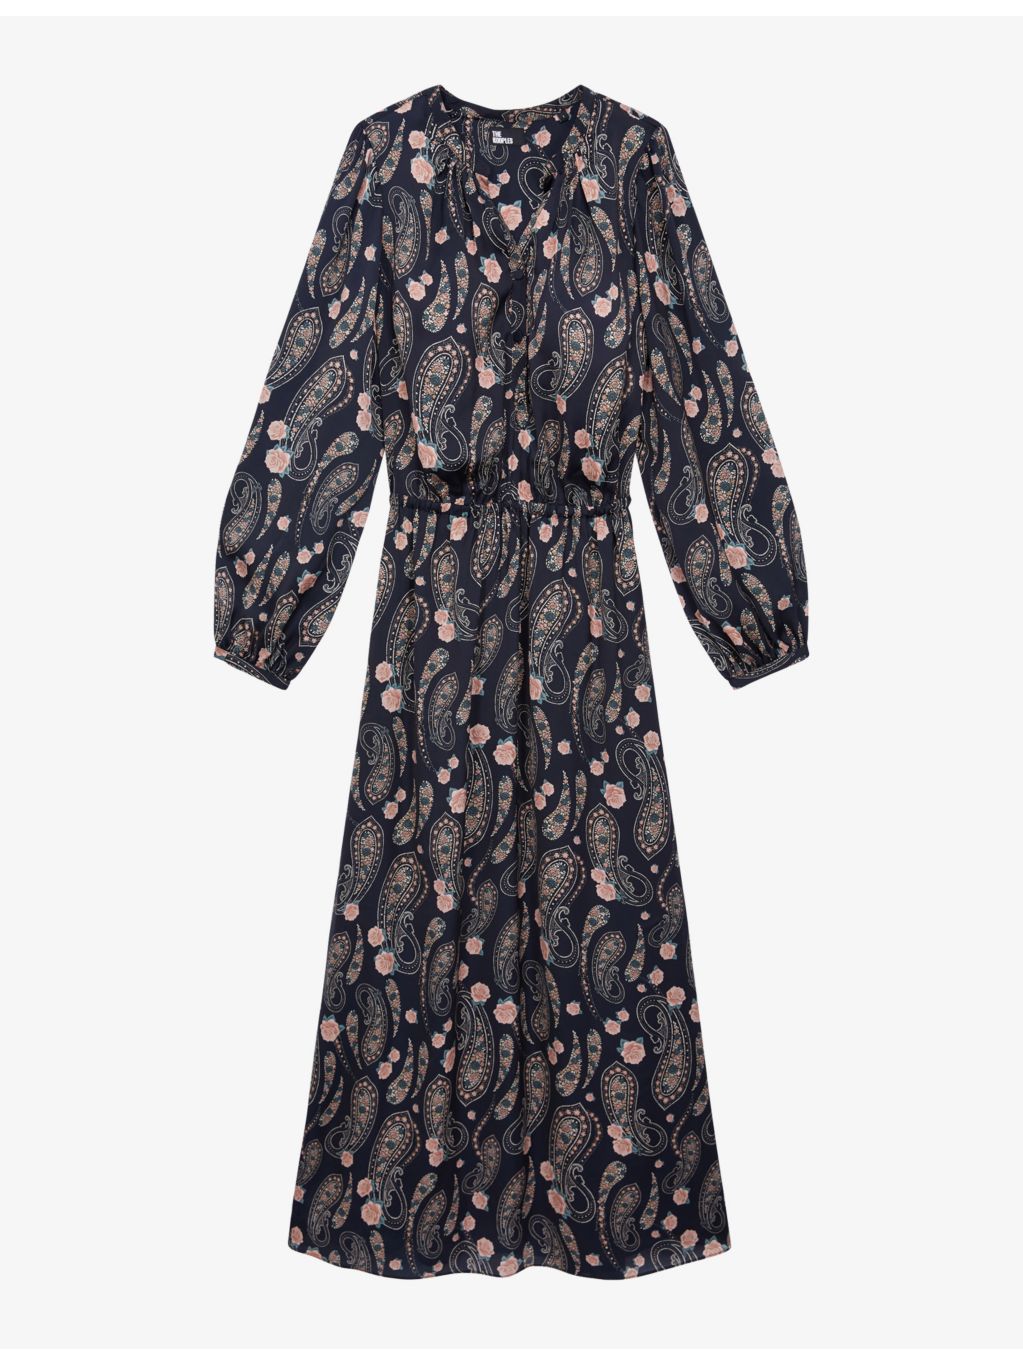 THE KOOPLES - Floral-print woven maxi dress